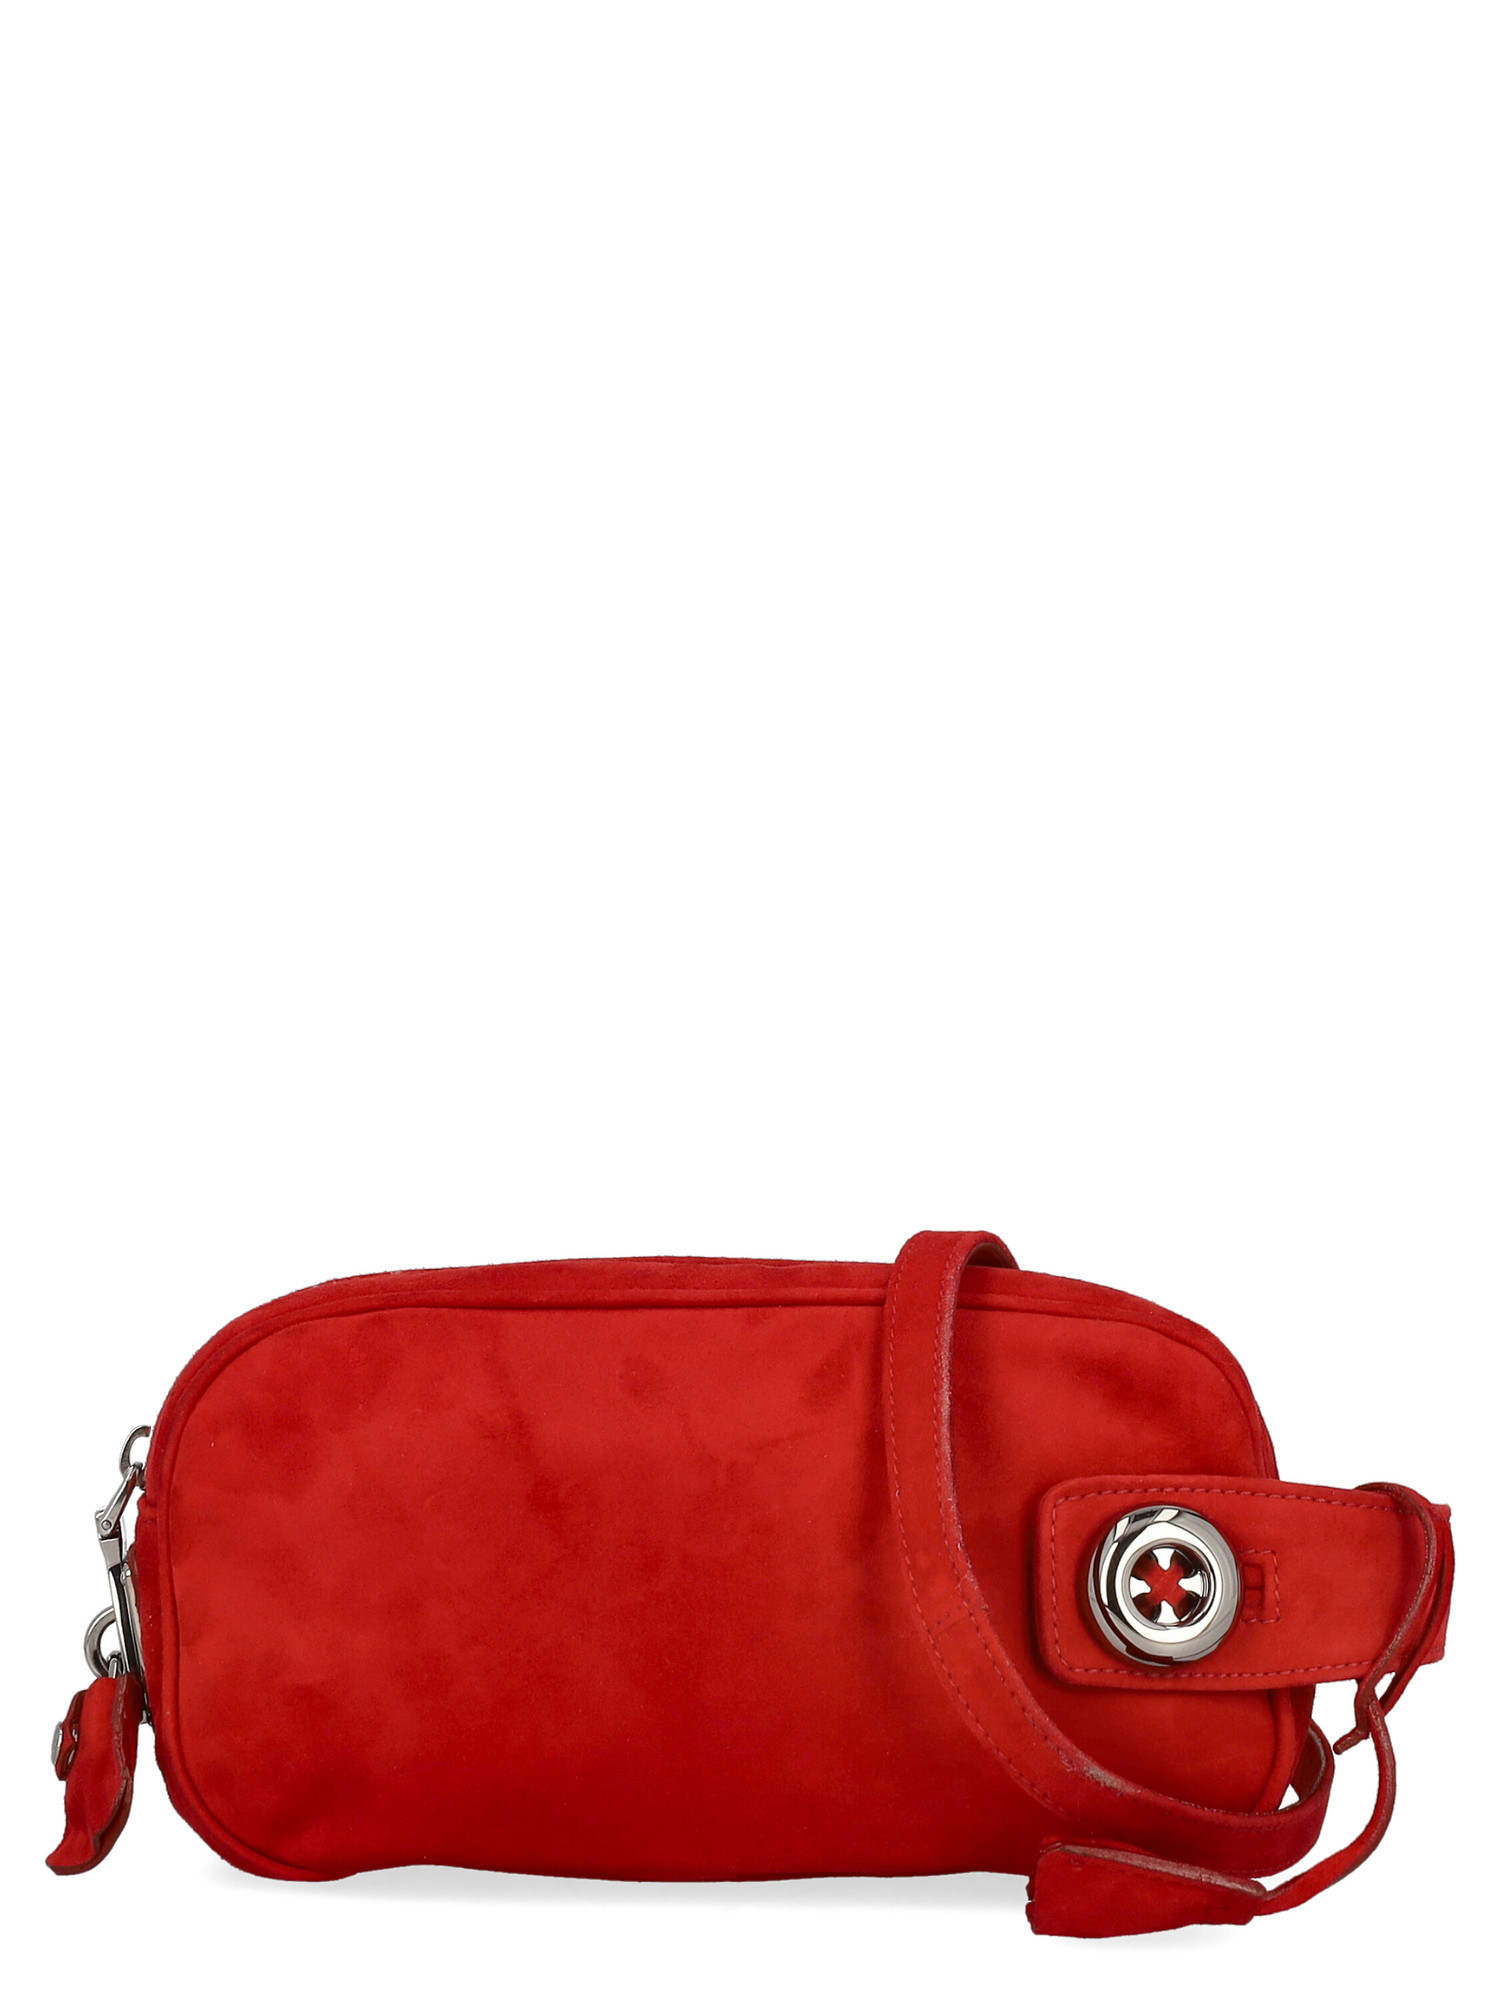 Pre-owned Prada Women's Handbags -  - In Red Leather